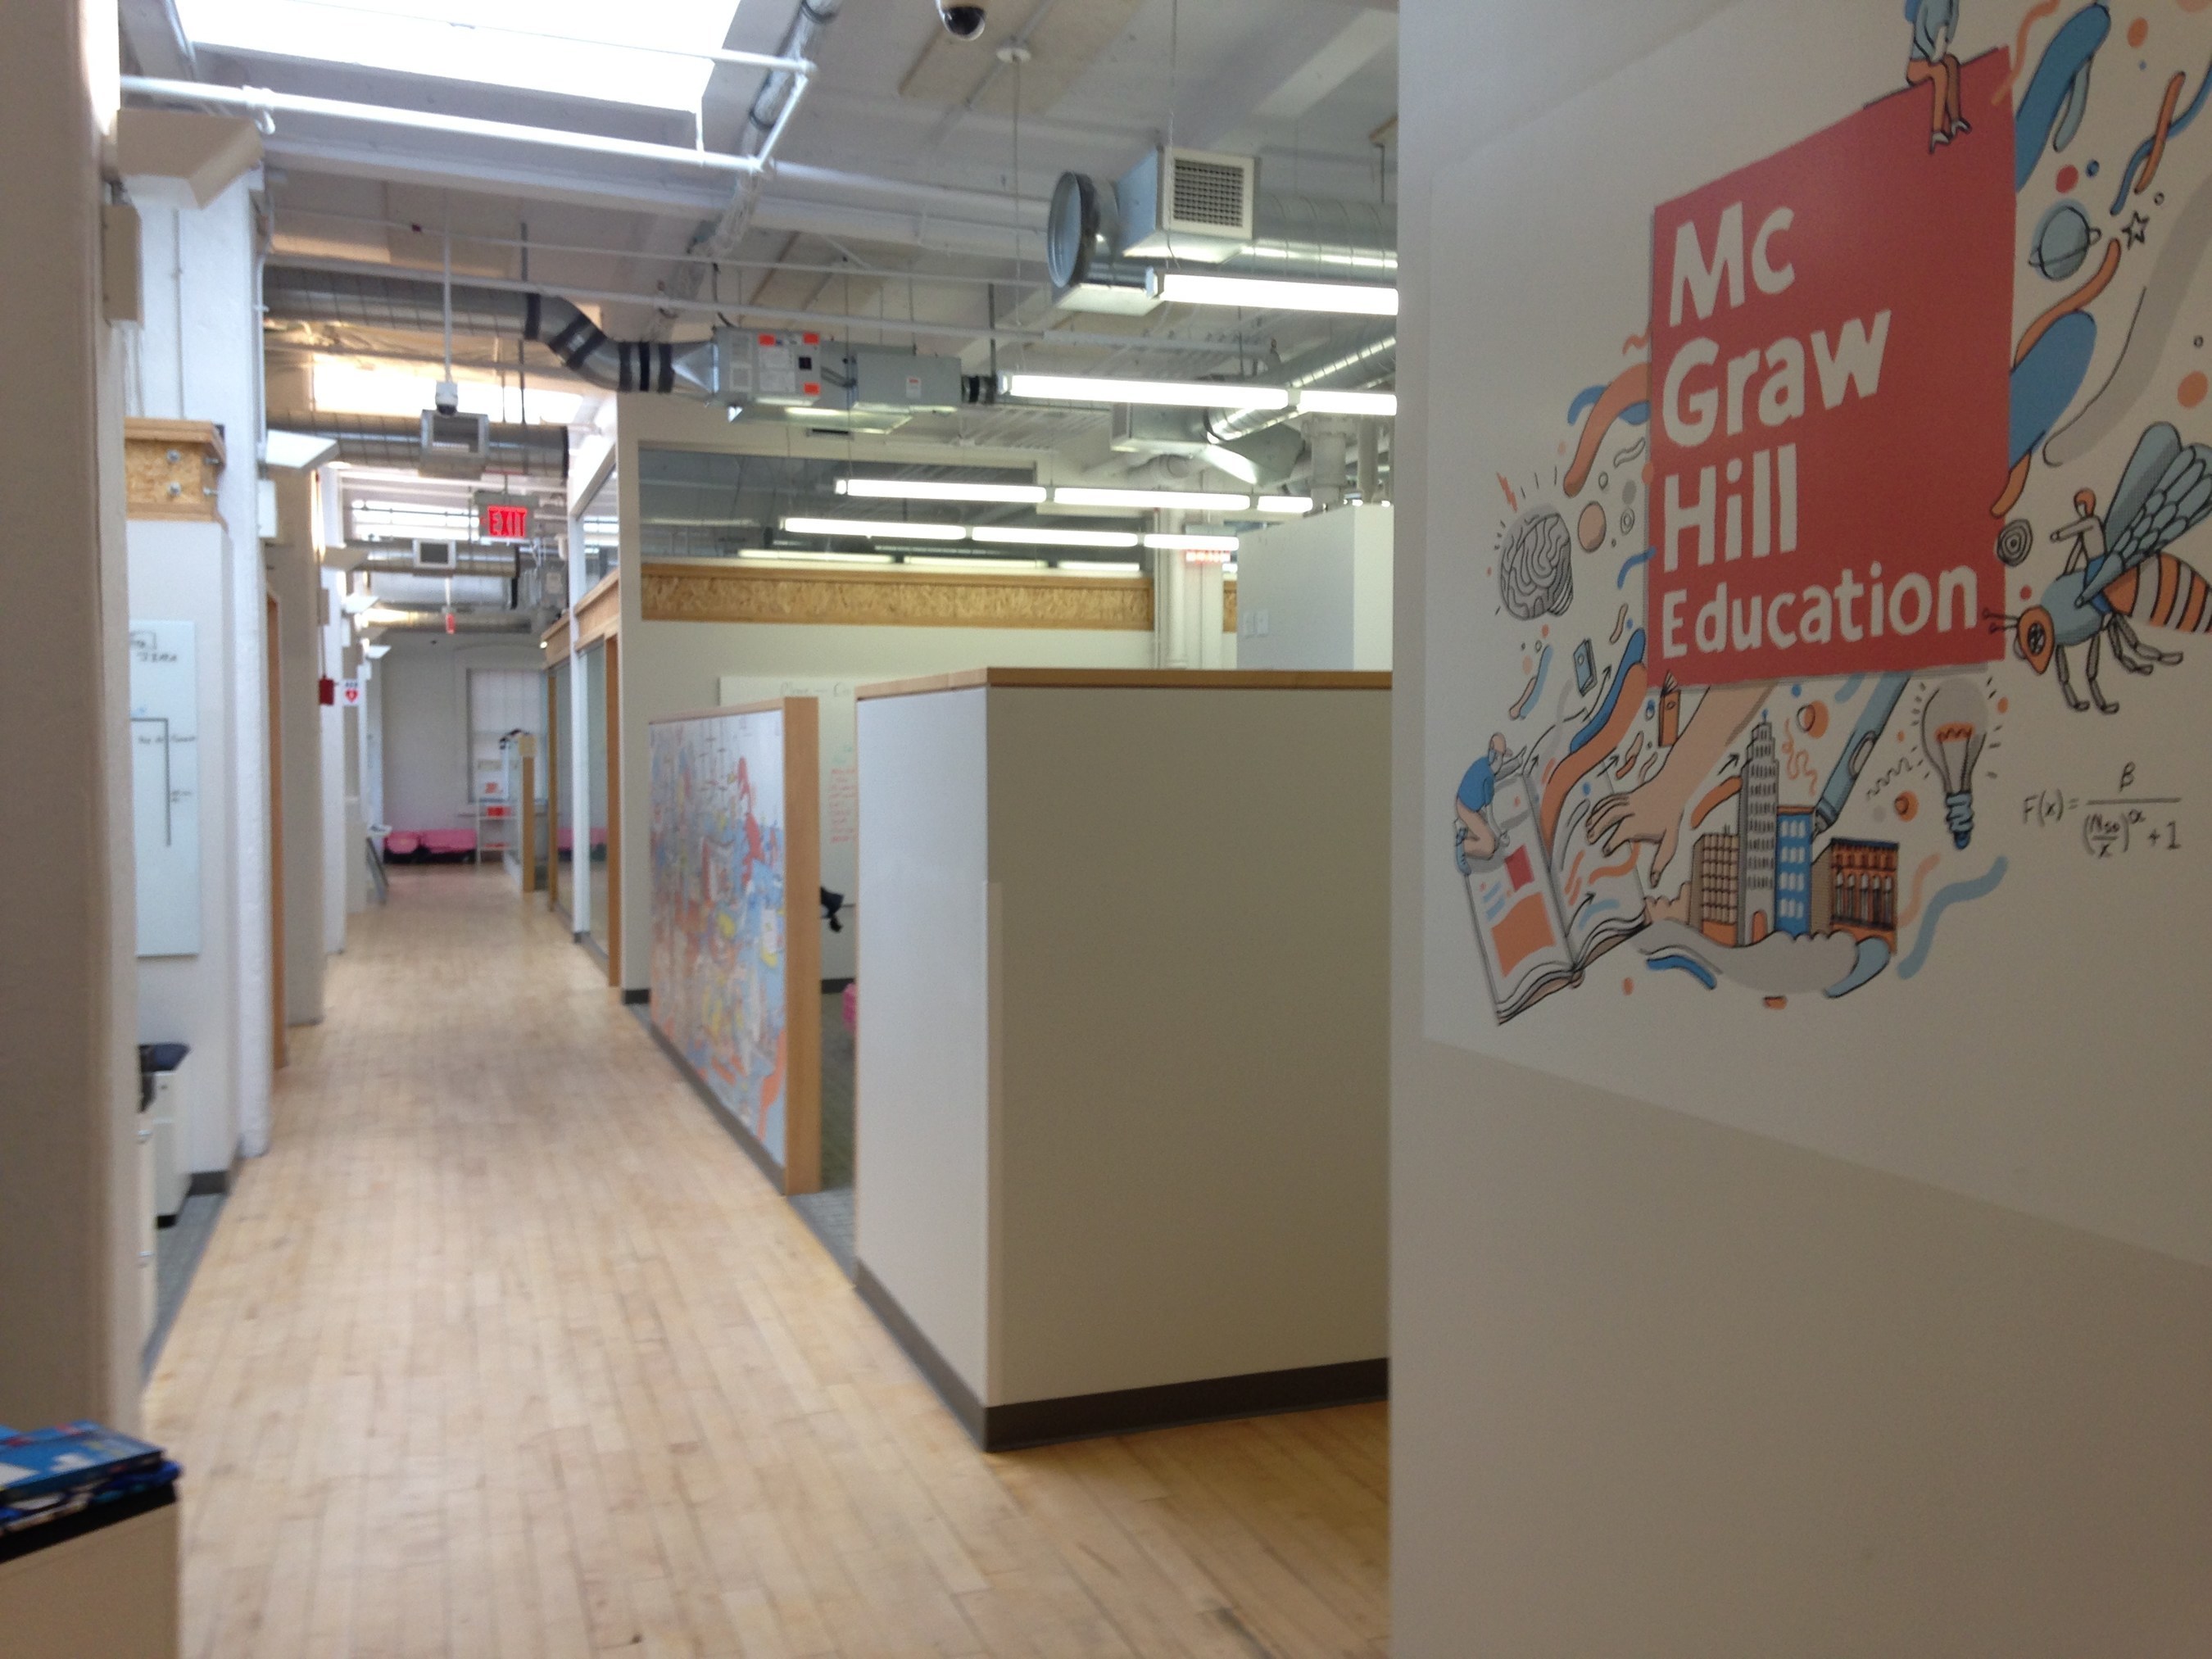 McGraw-Hill Education's R&D headquarters in Boston.